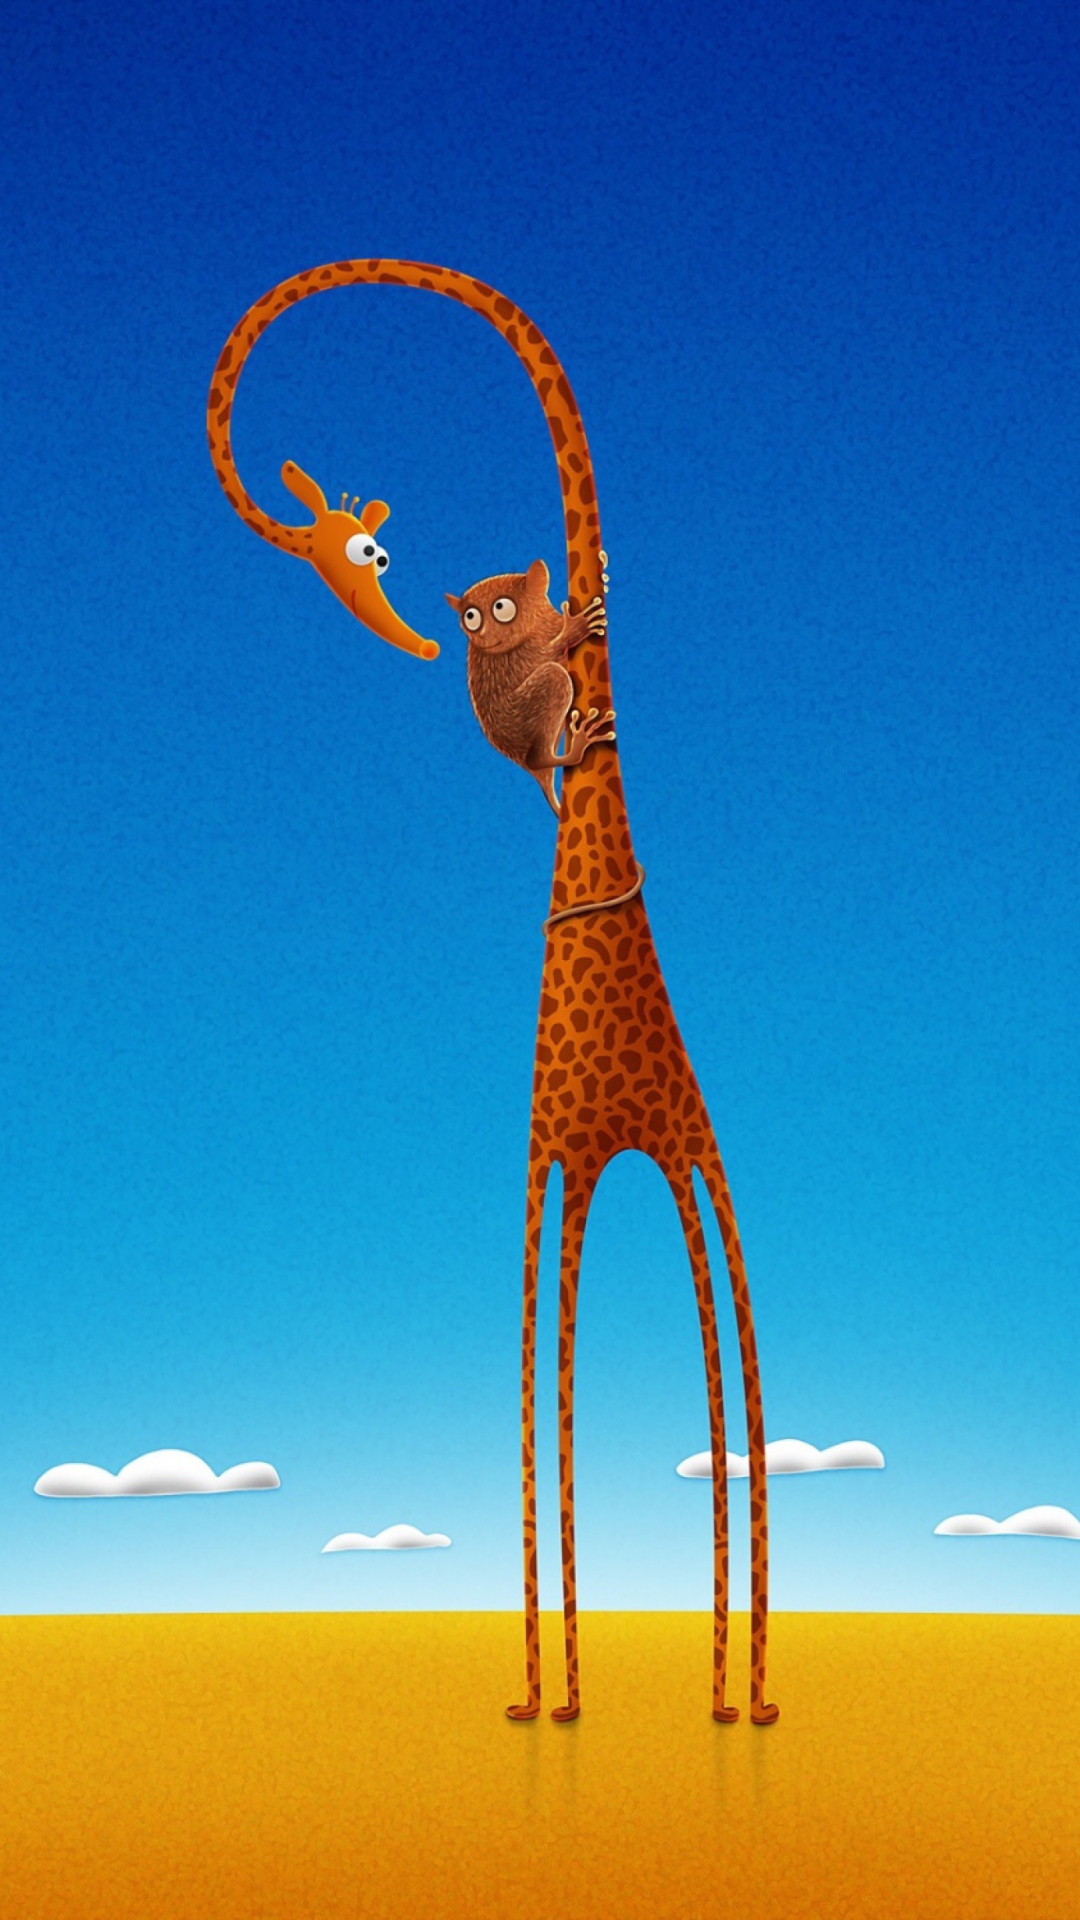 Funny Giraffe With Friend wallpaper 1080x1920